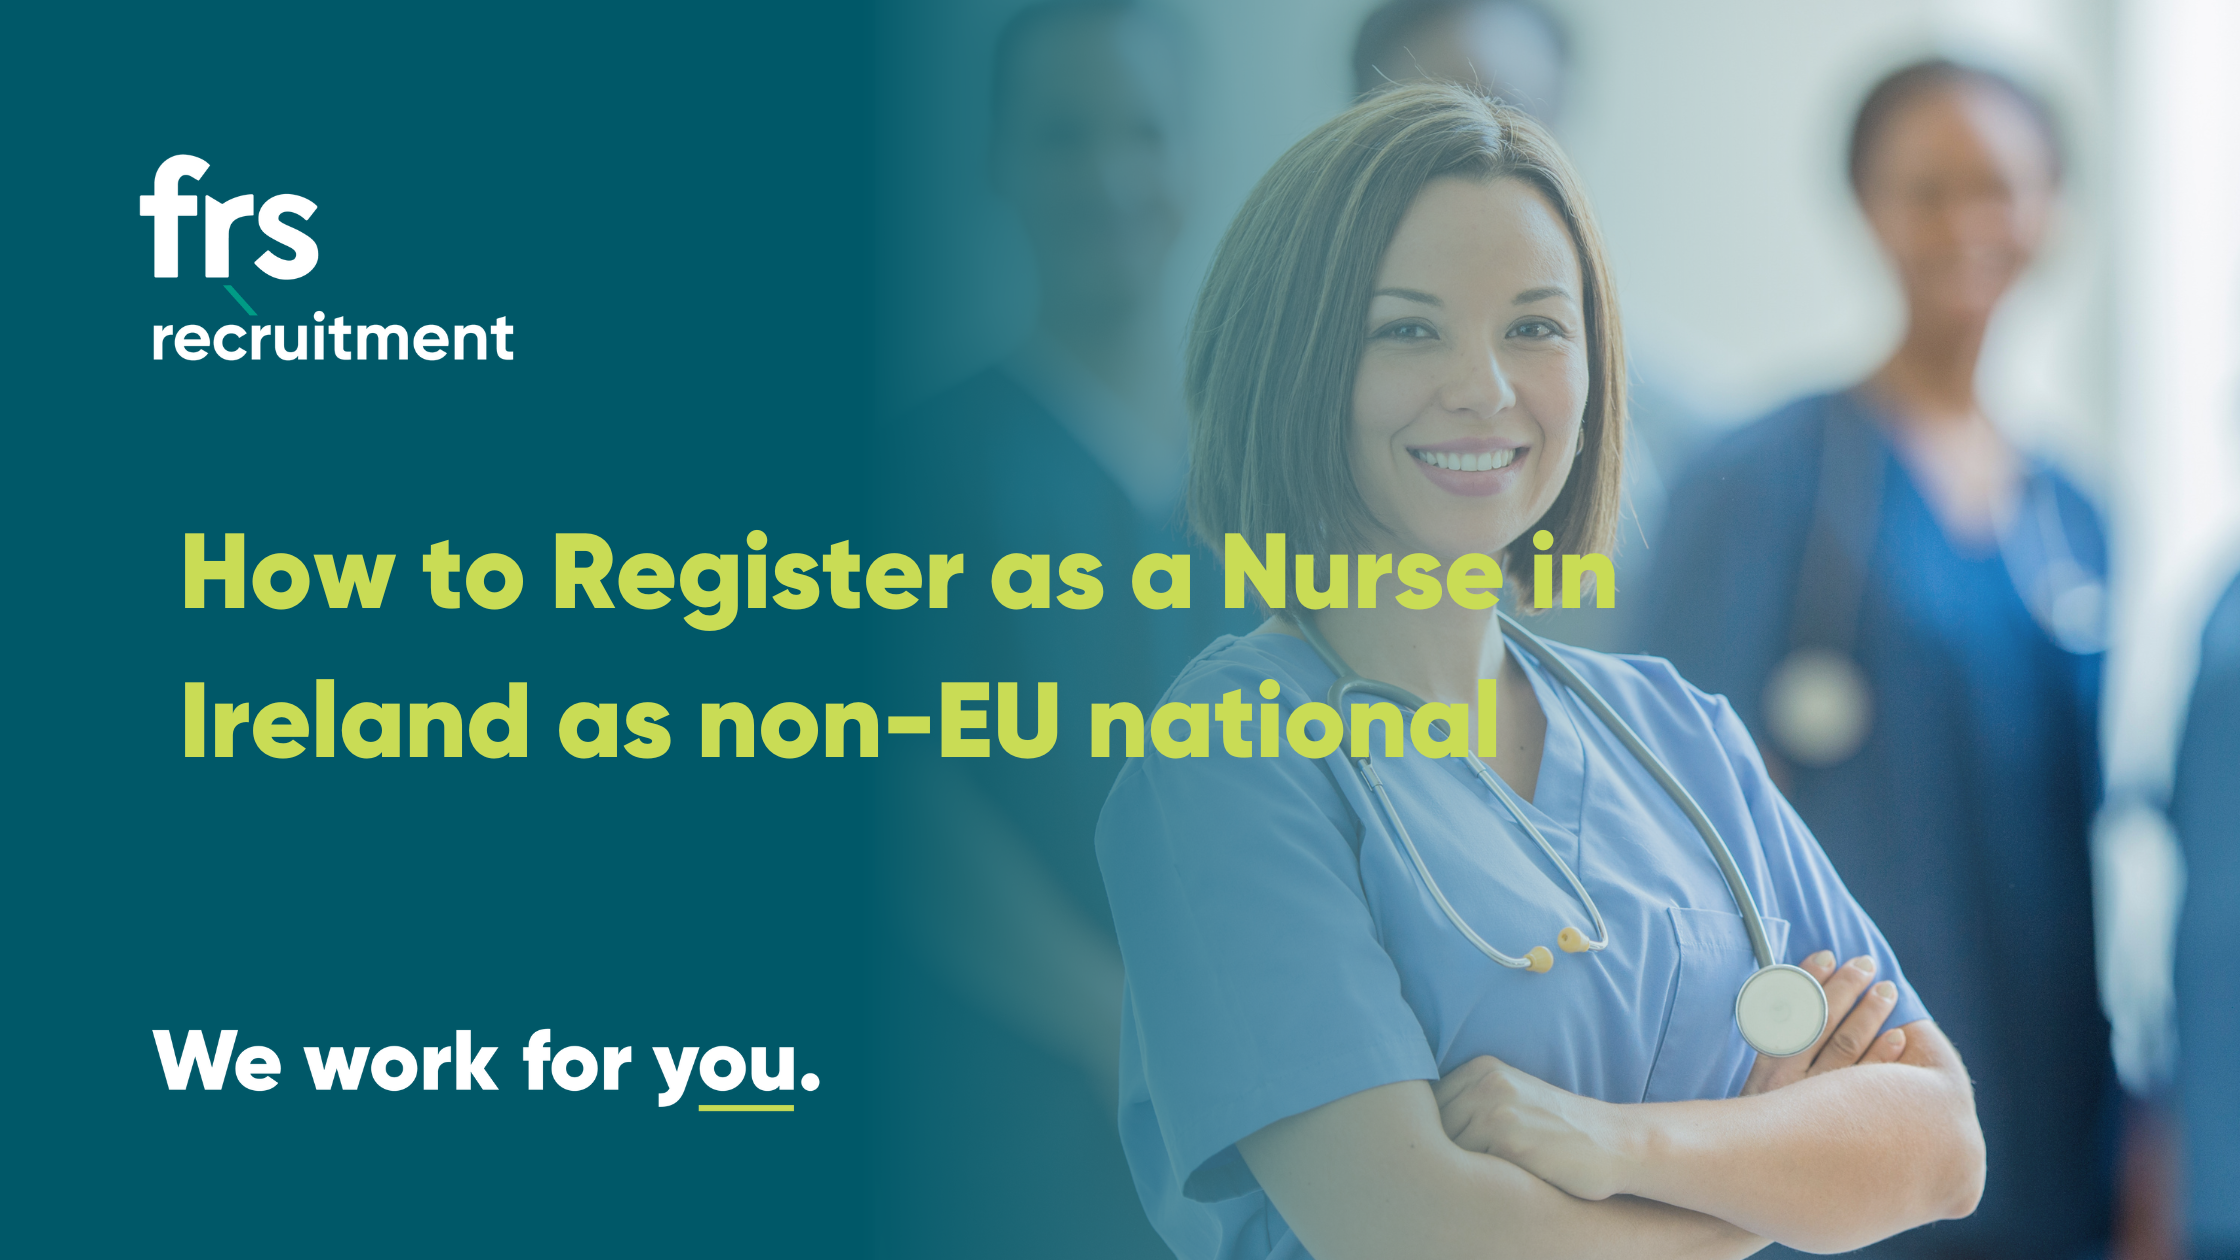 How to register as a Nurse in Ireland for Non-EU National